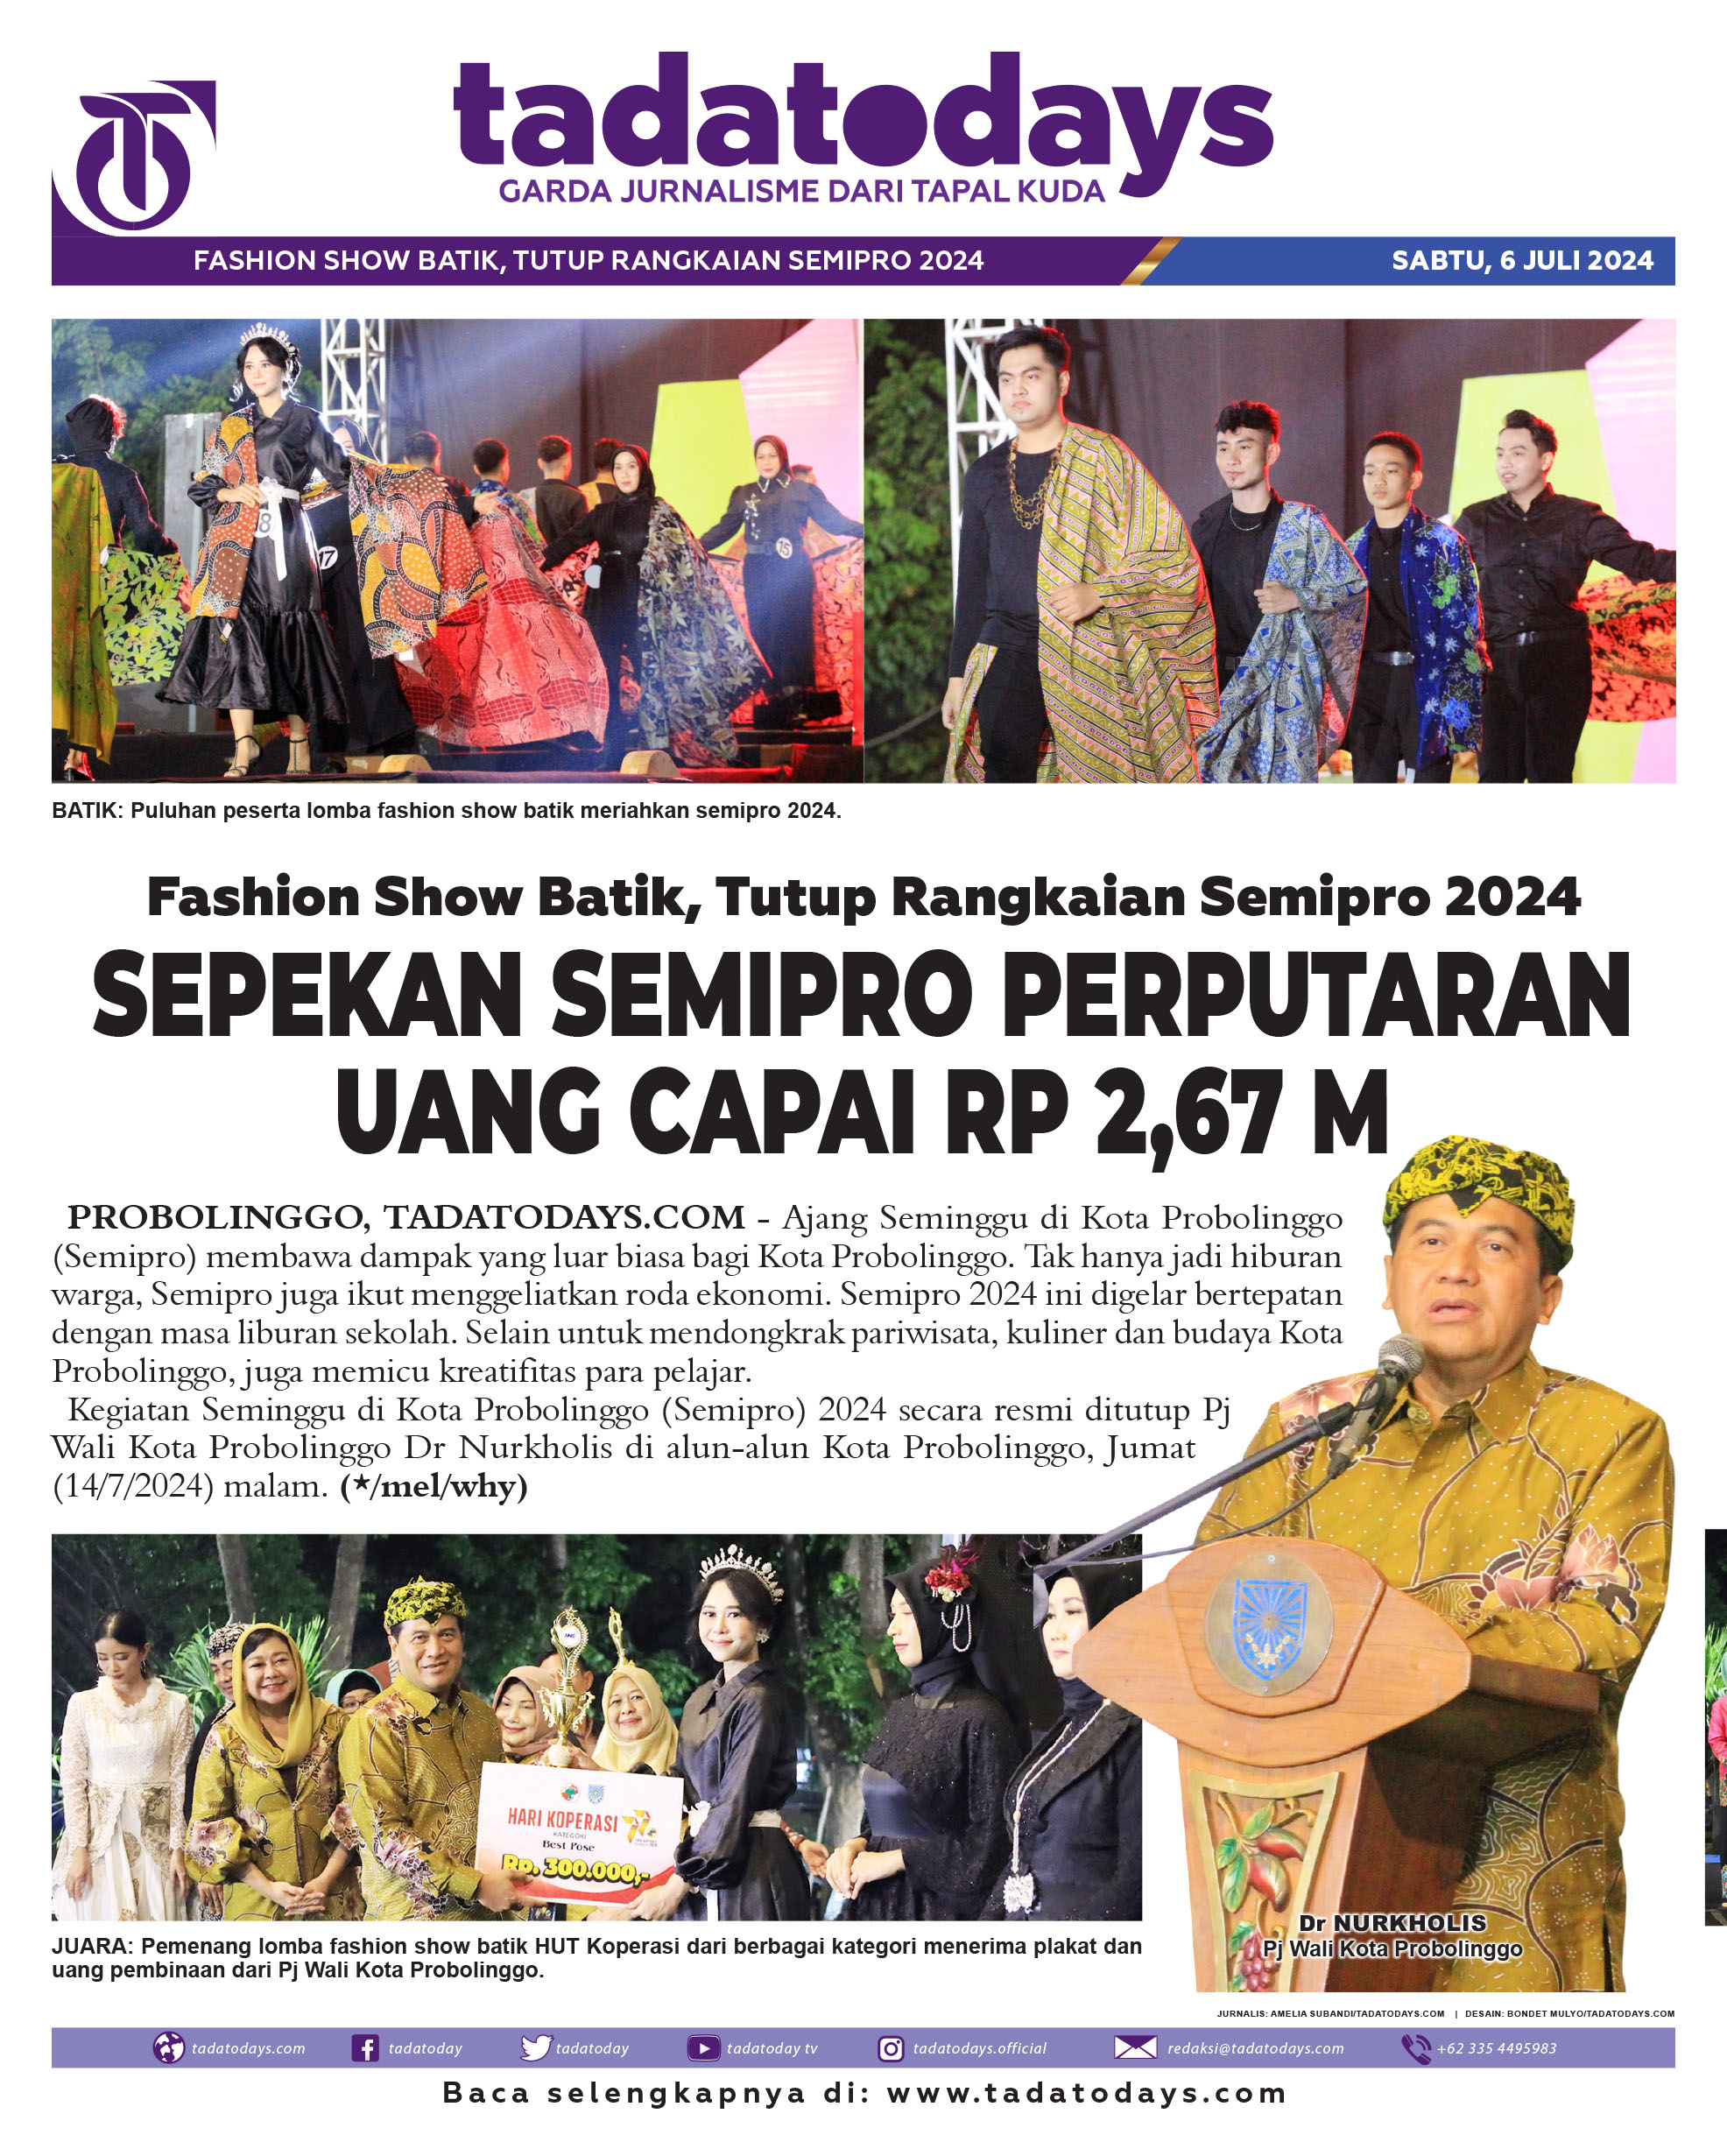 Fashion Show Batik, Menutup Rangkaian Semipro 2024